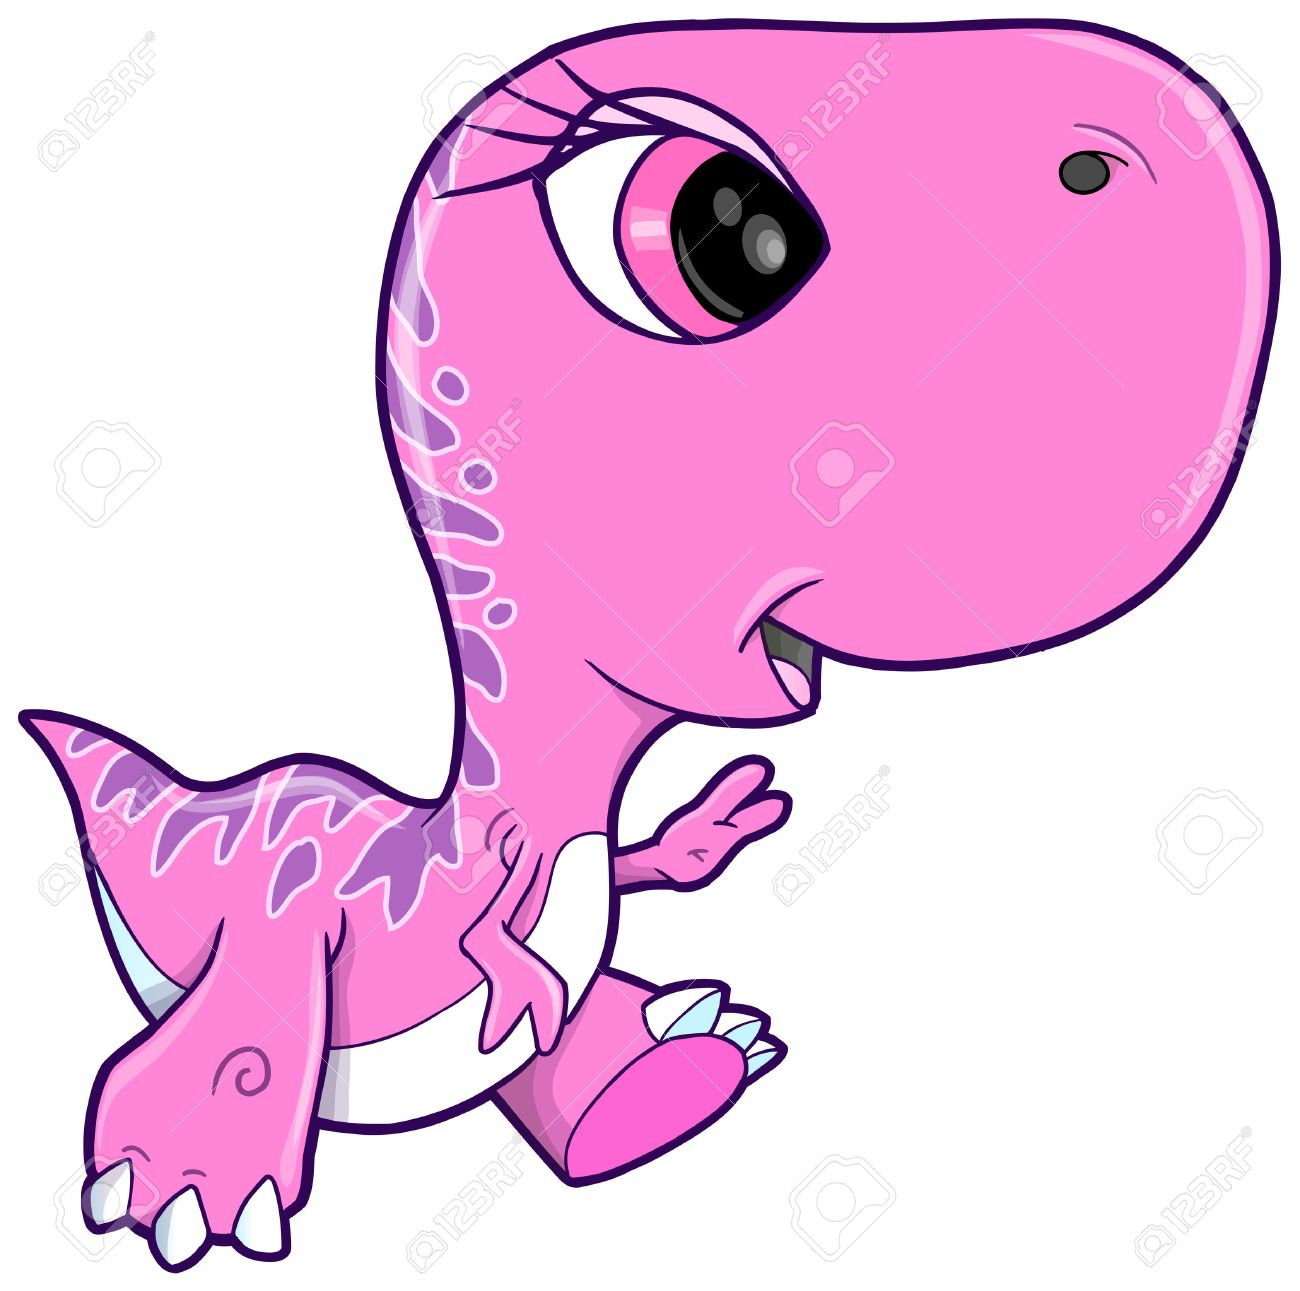 Pink Girl Tyrannosaurus Rex Dinosaur Vector Illustration art.